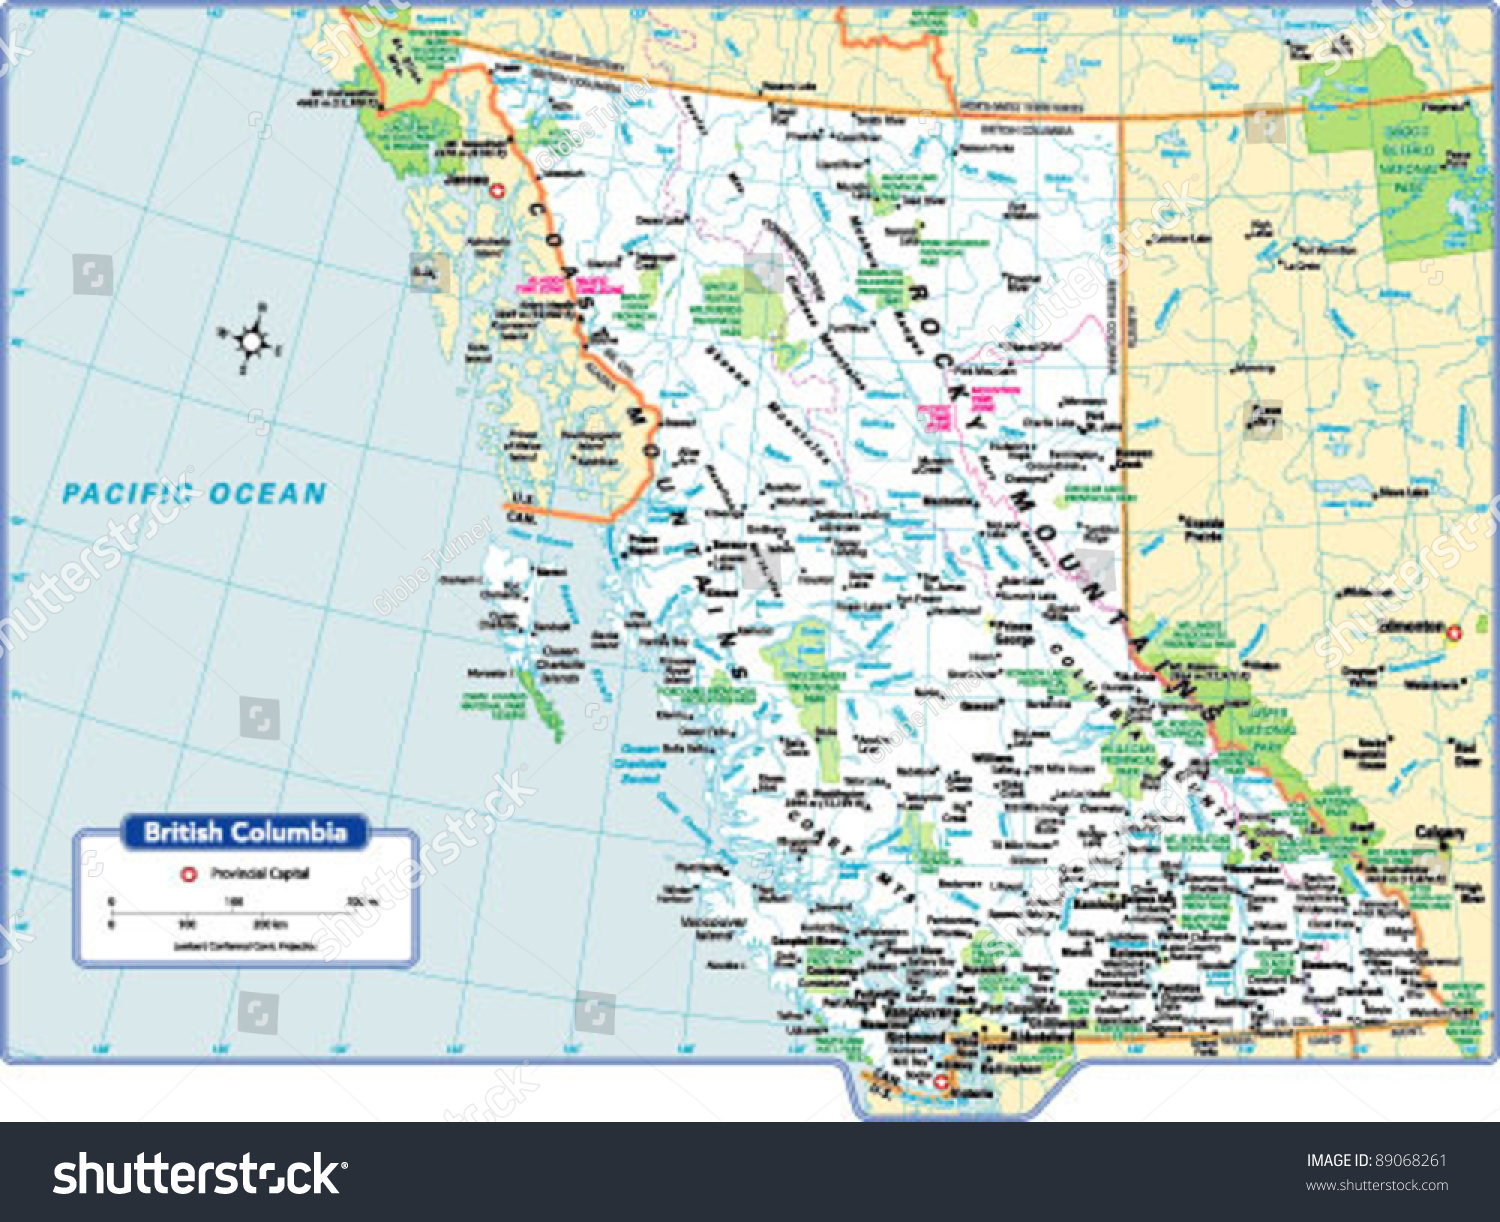 British Columbia Province Map Stock Vector Illustration 89068261